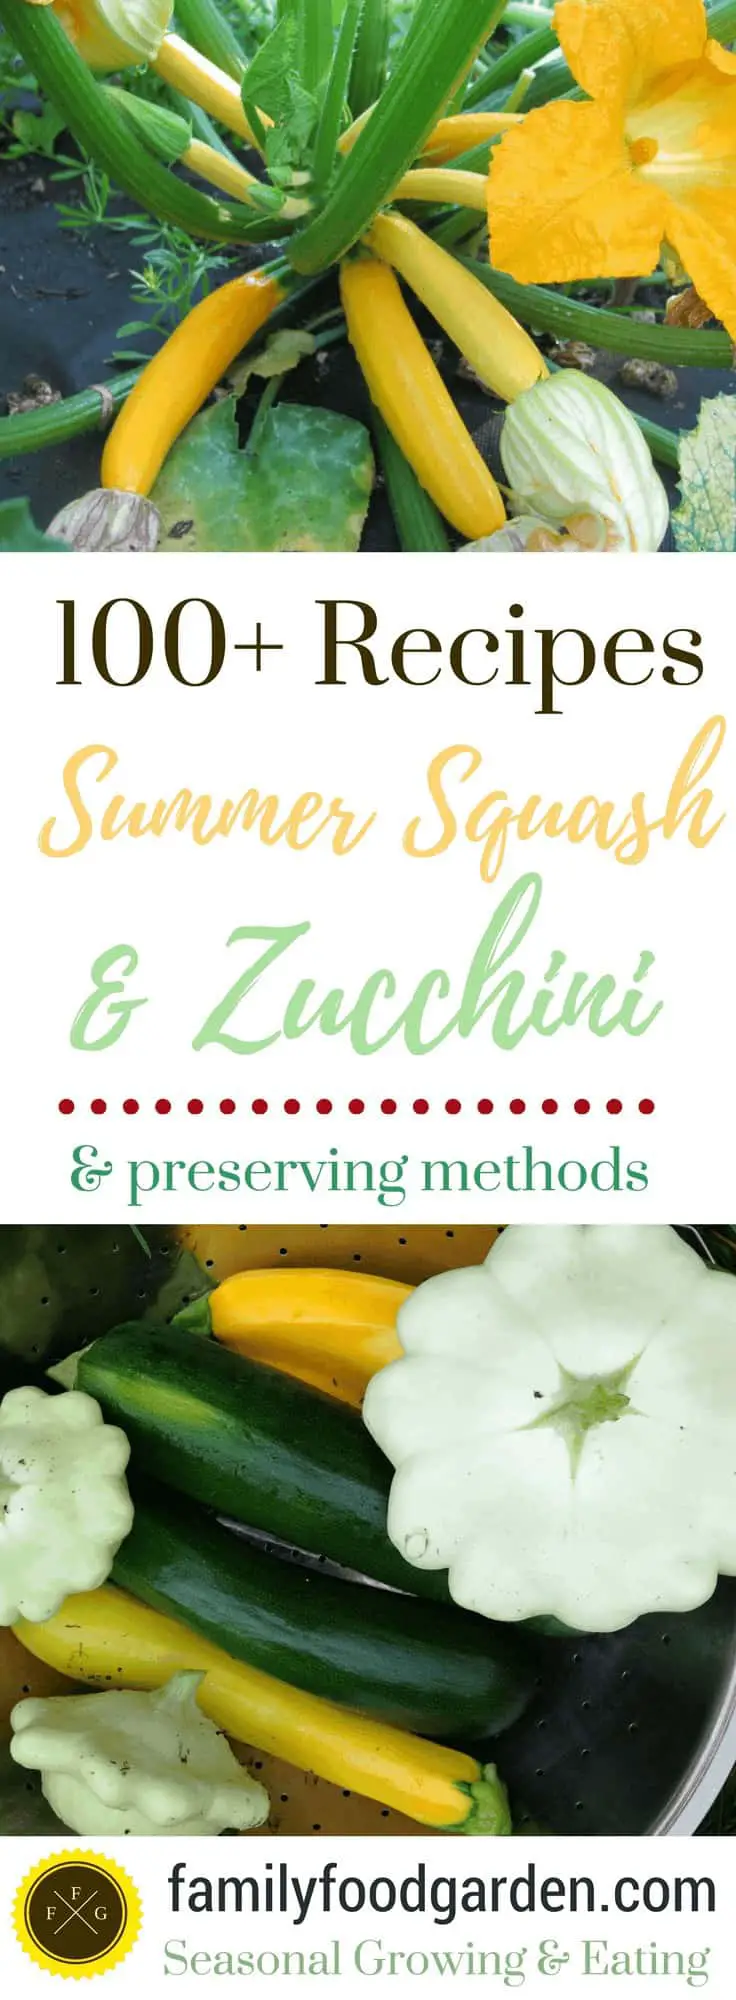 zucchini & summer squash recipes